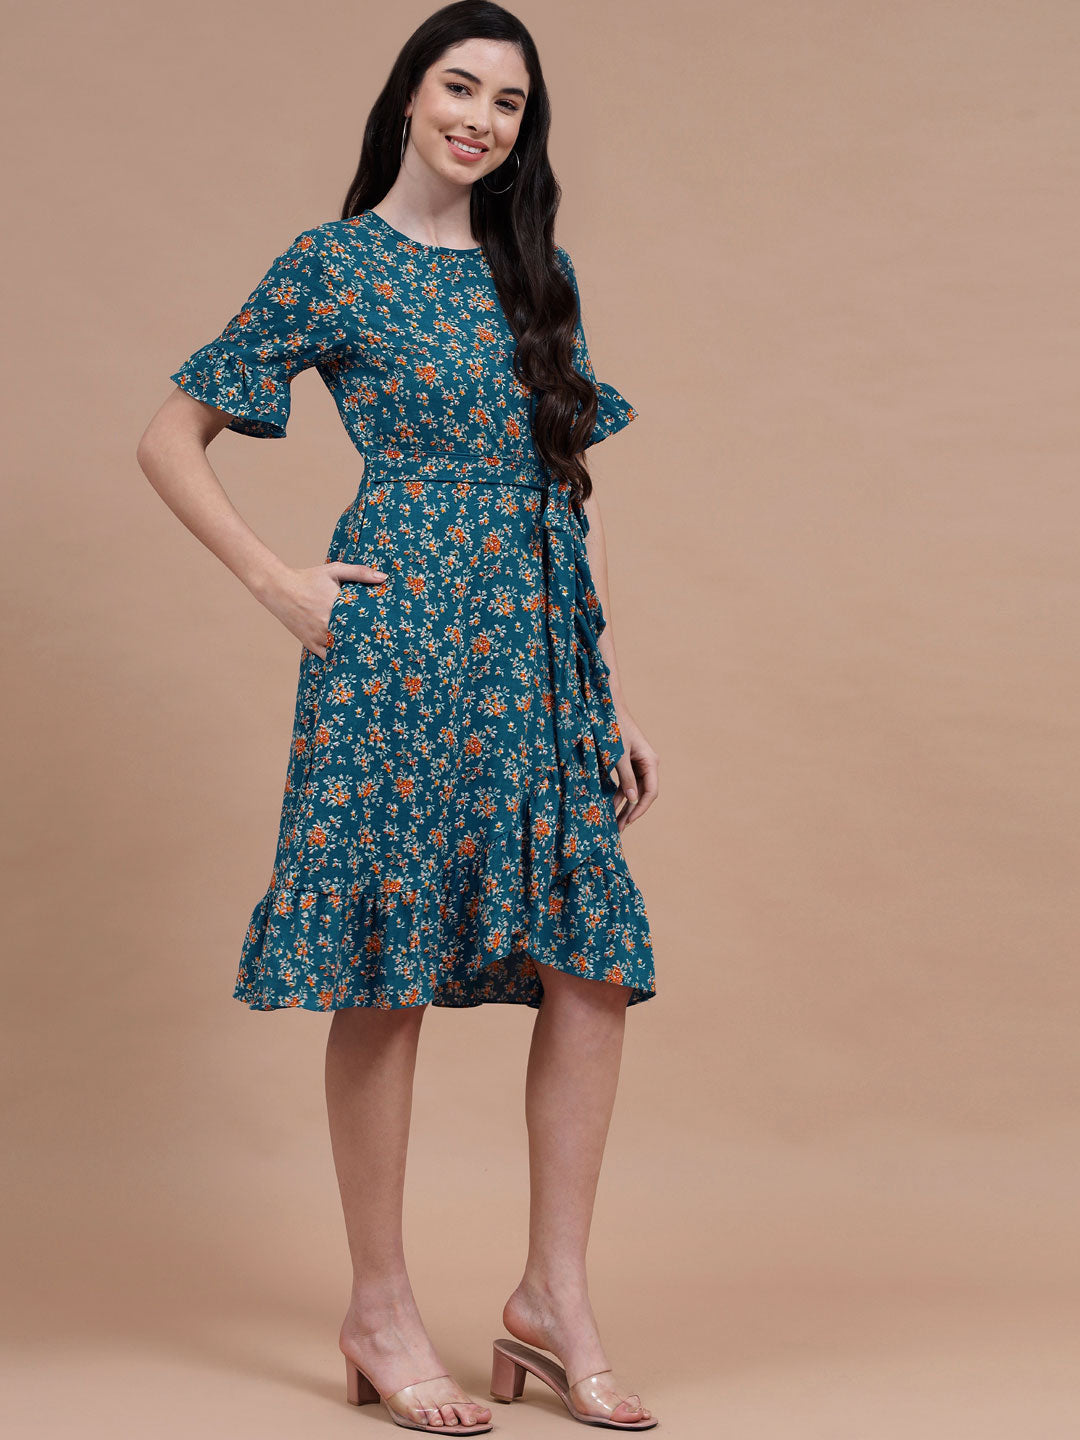 Women's Ruffle Dress - Blue Bloom Floral Ruffle Dress#6